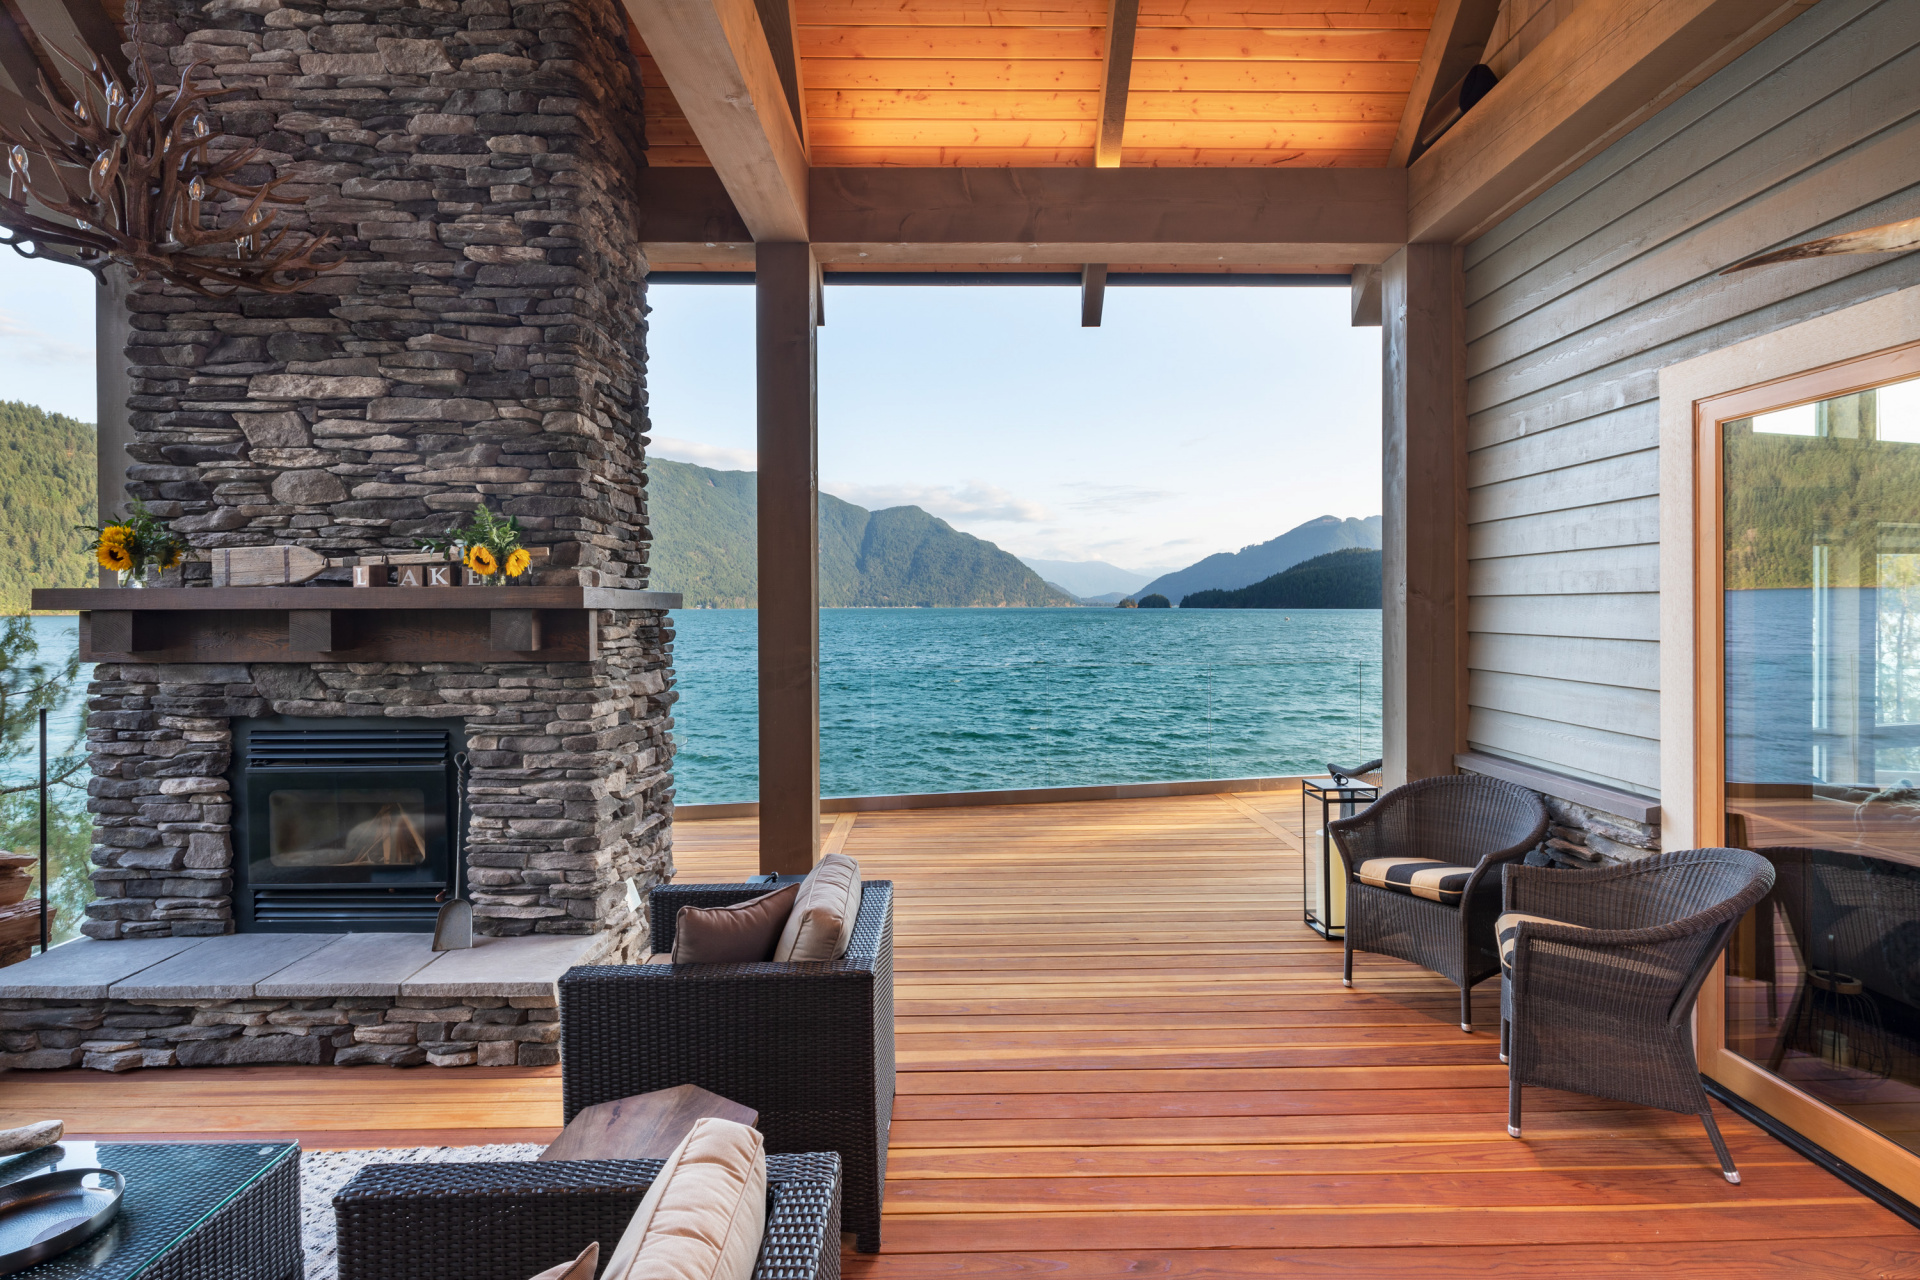 Redwood Indoor-Outdoor Deck with Stunning Lake Views 